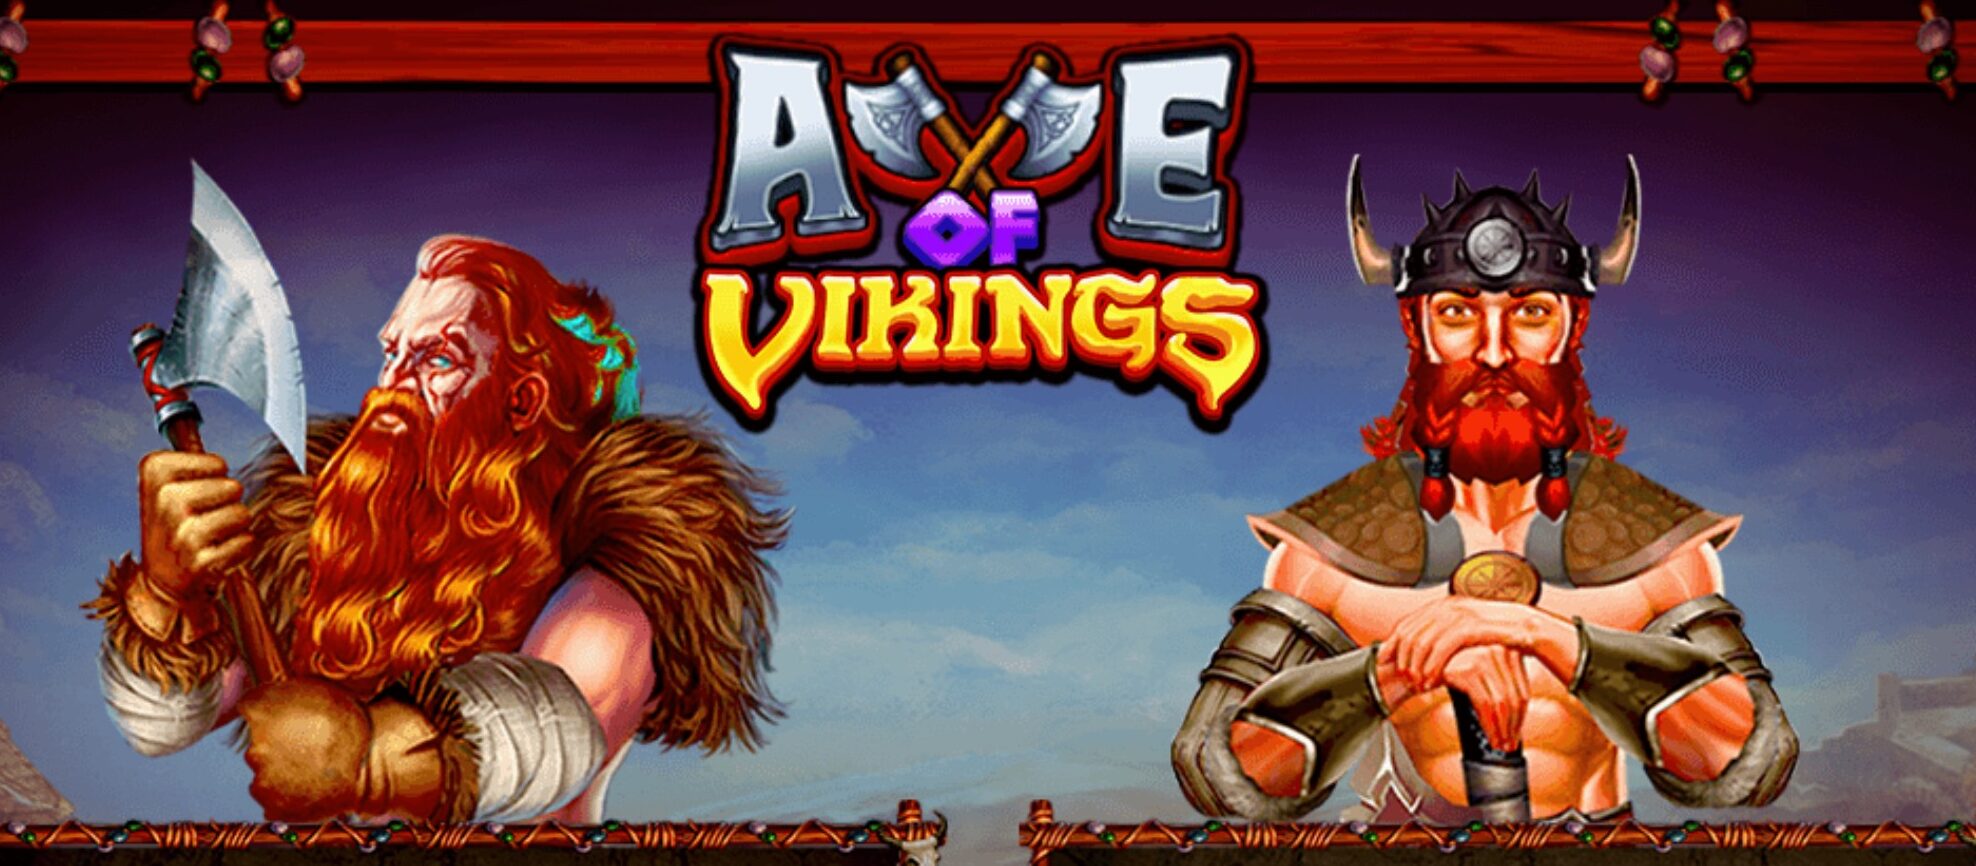 AXE Of Vikings